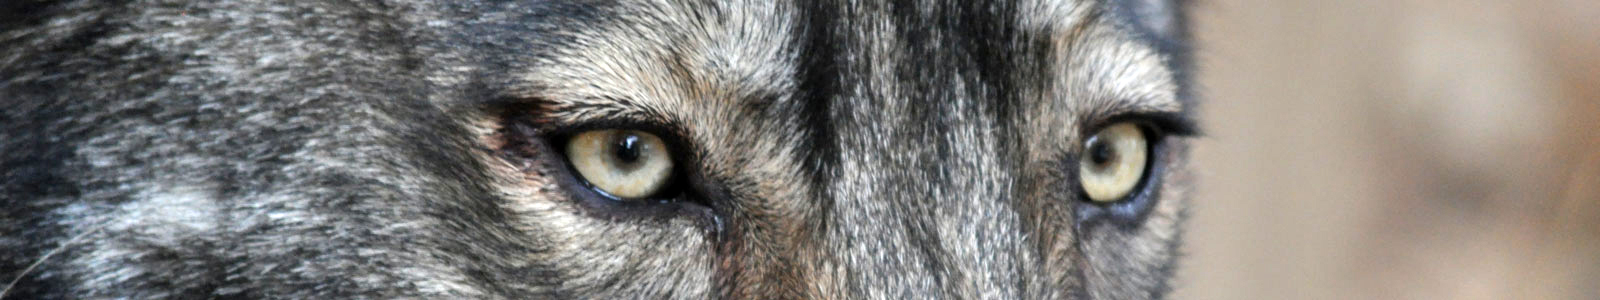 Texas Wolfdog Project Tyler Zachau Header Image